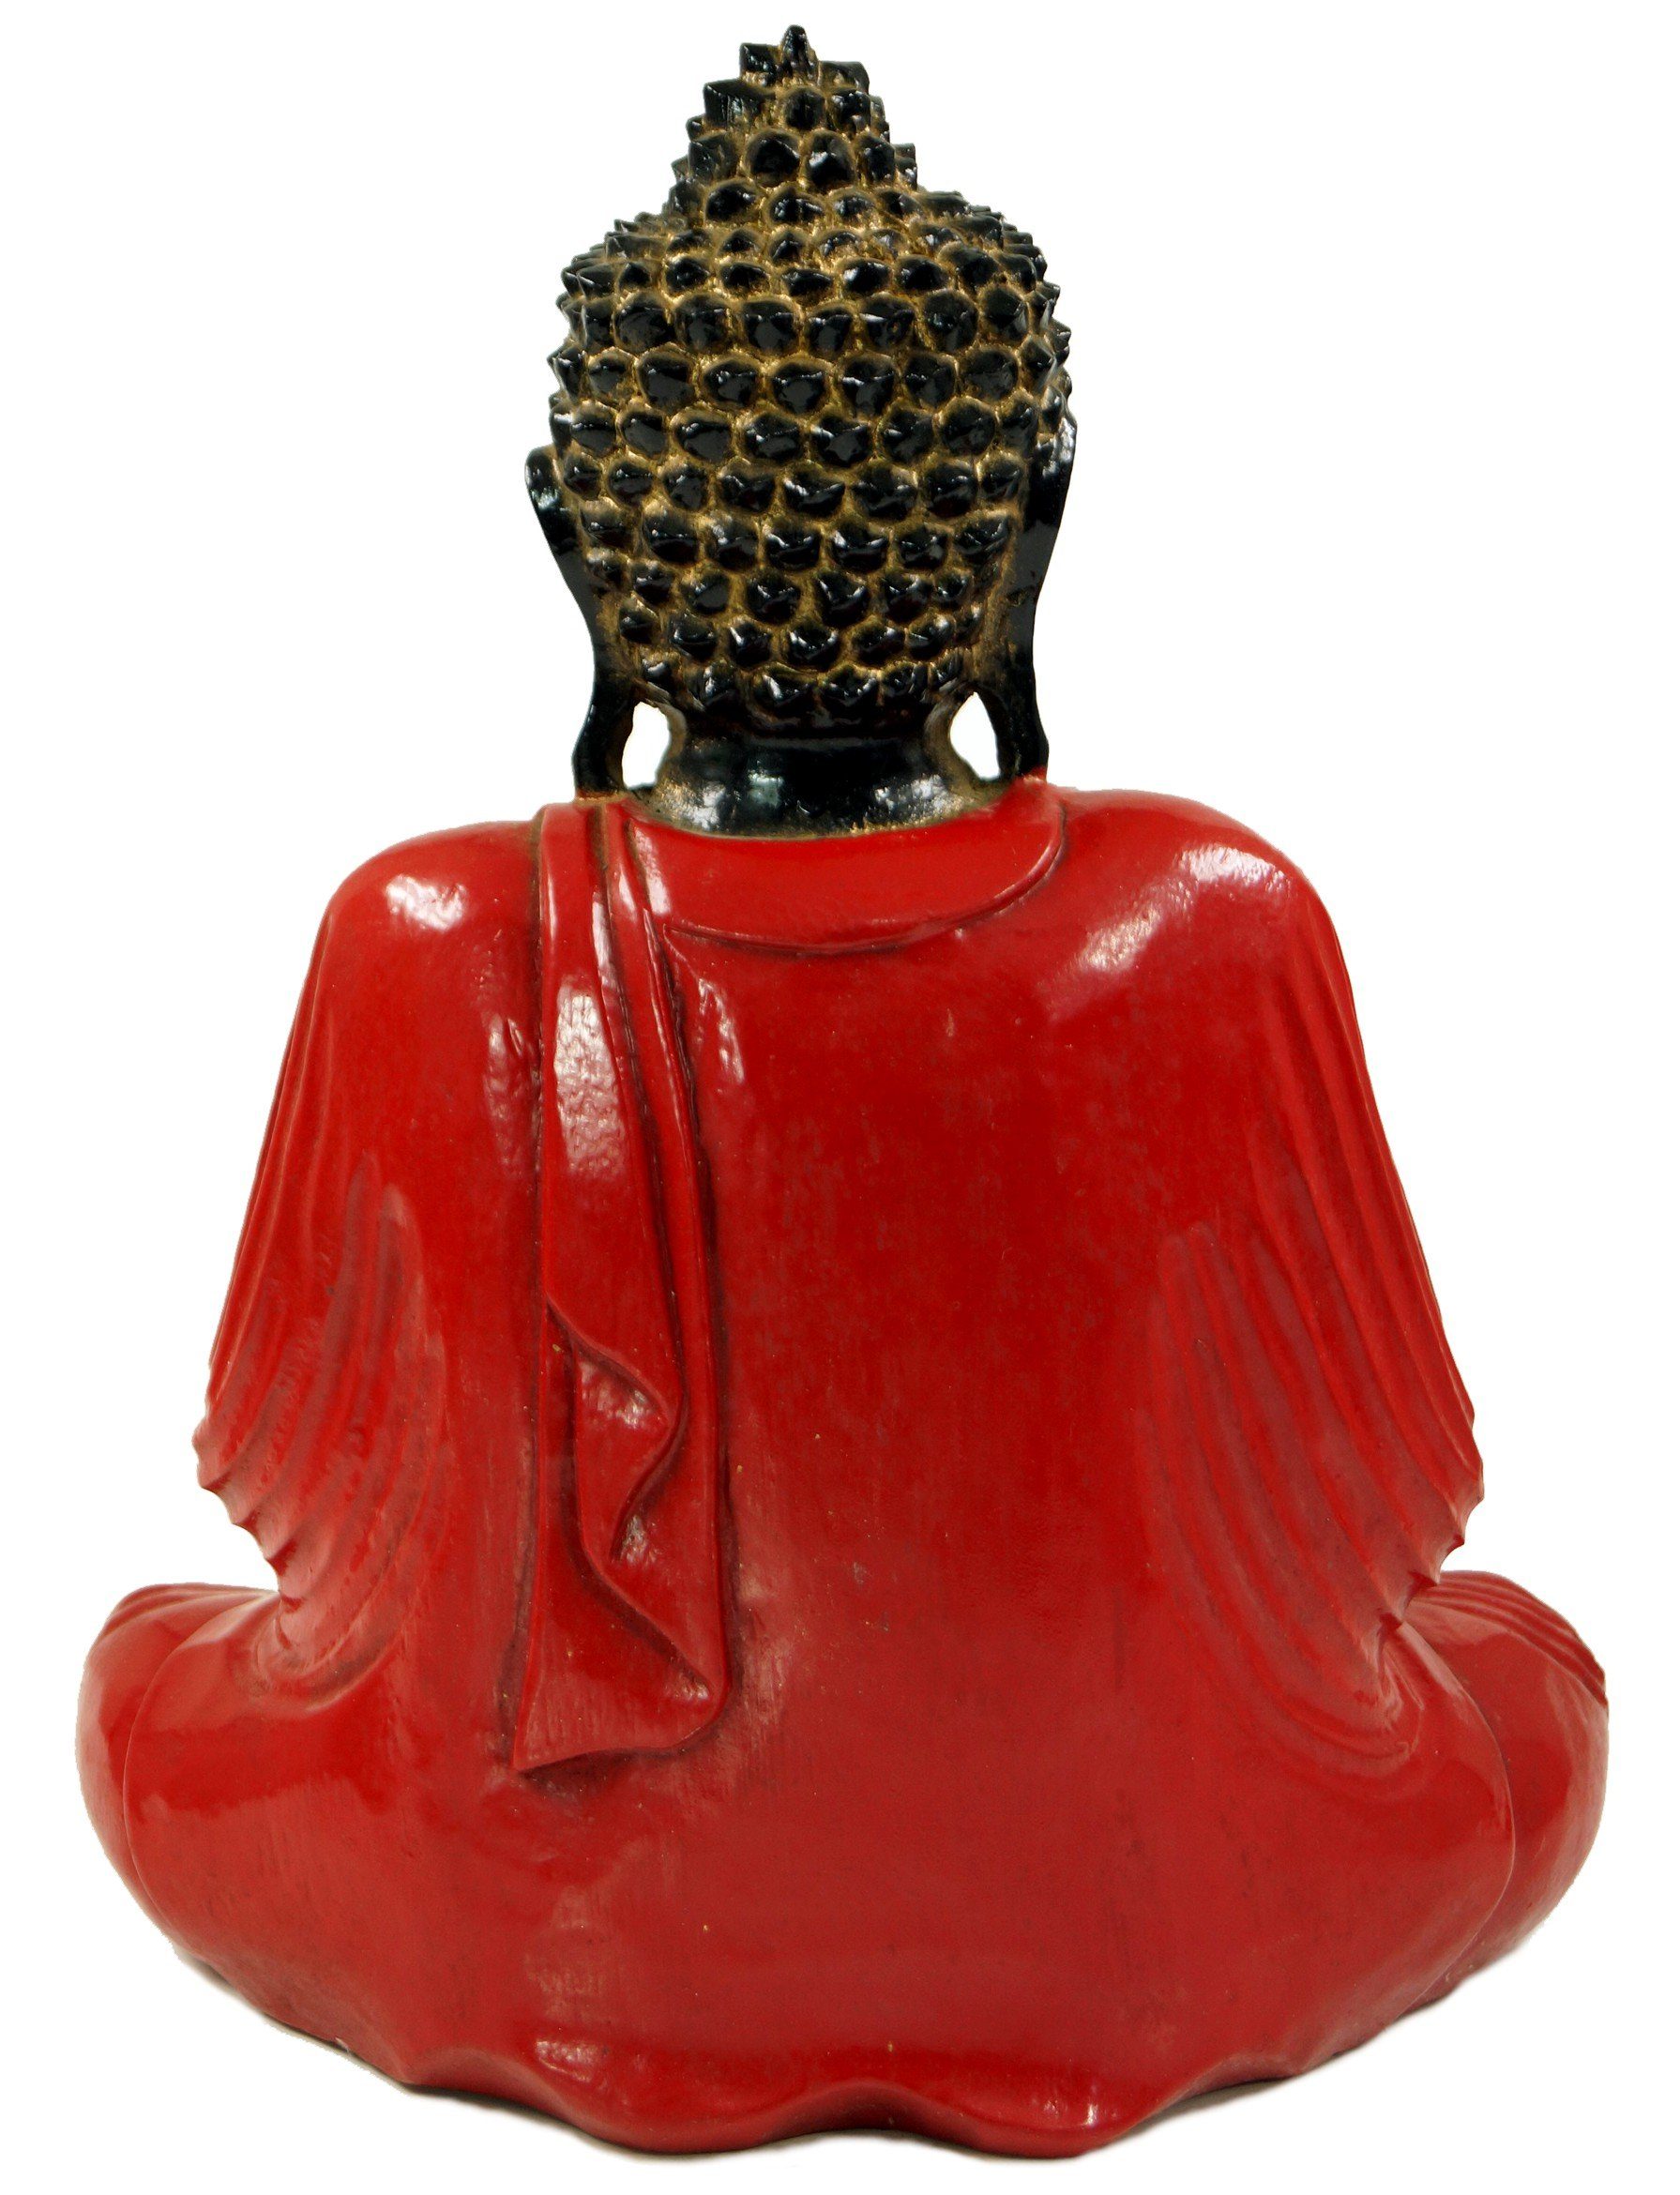 Anjali Guru-Shop rot Mudra im Buddhafigur Geschnitzter sitzender -.. Buddha